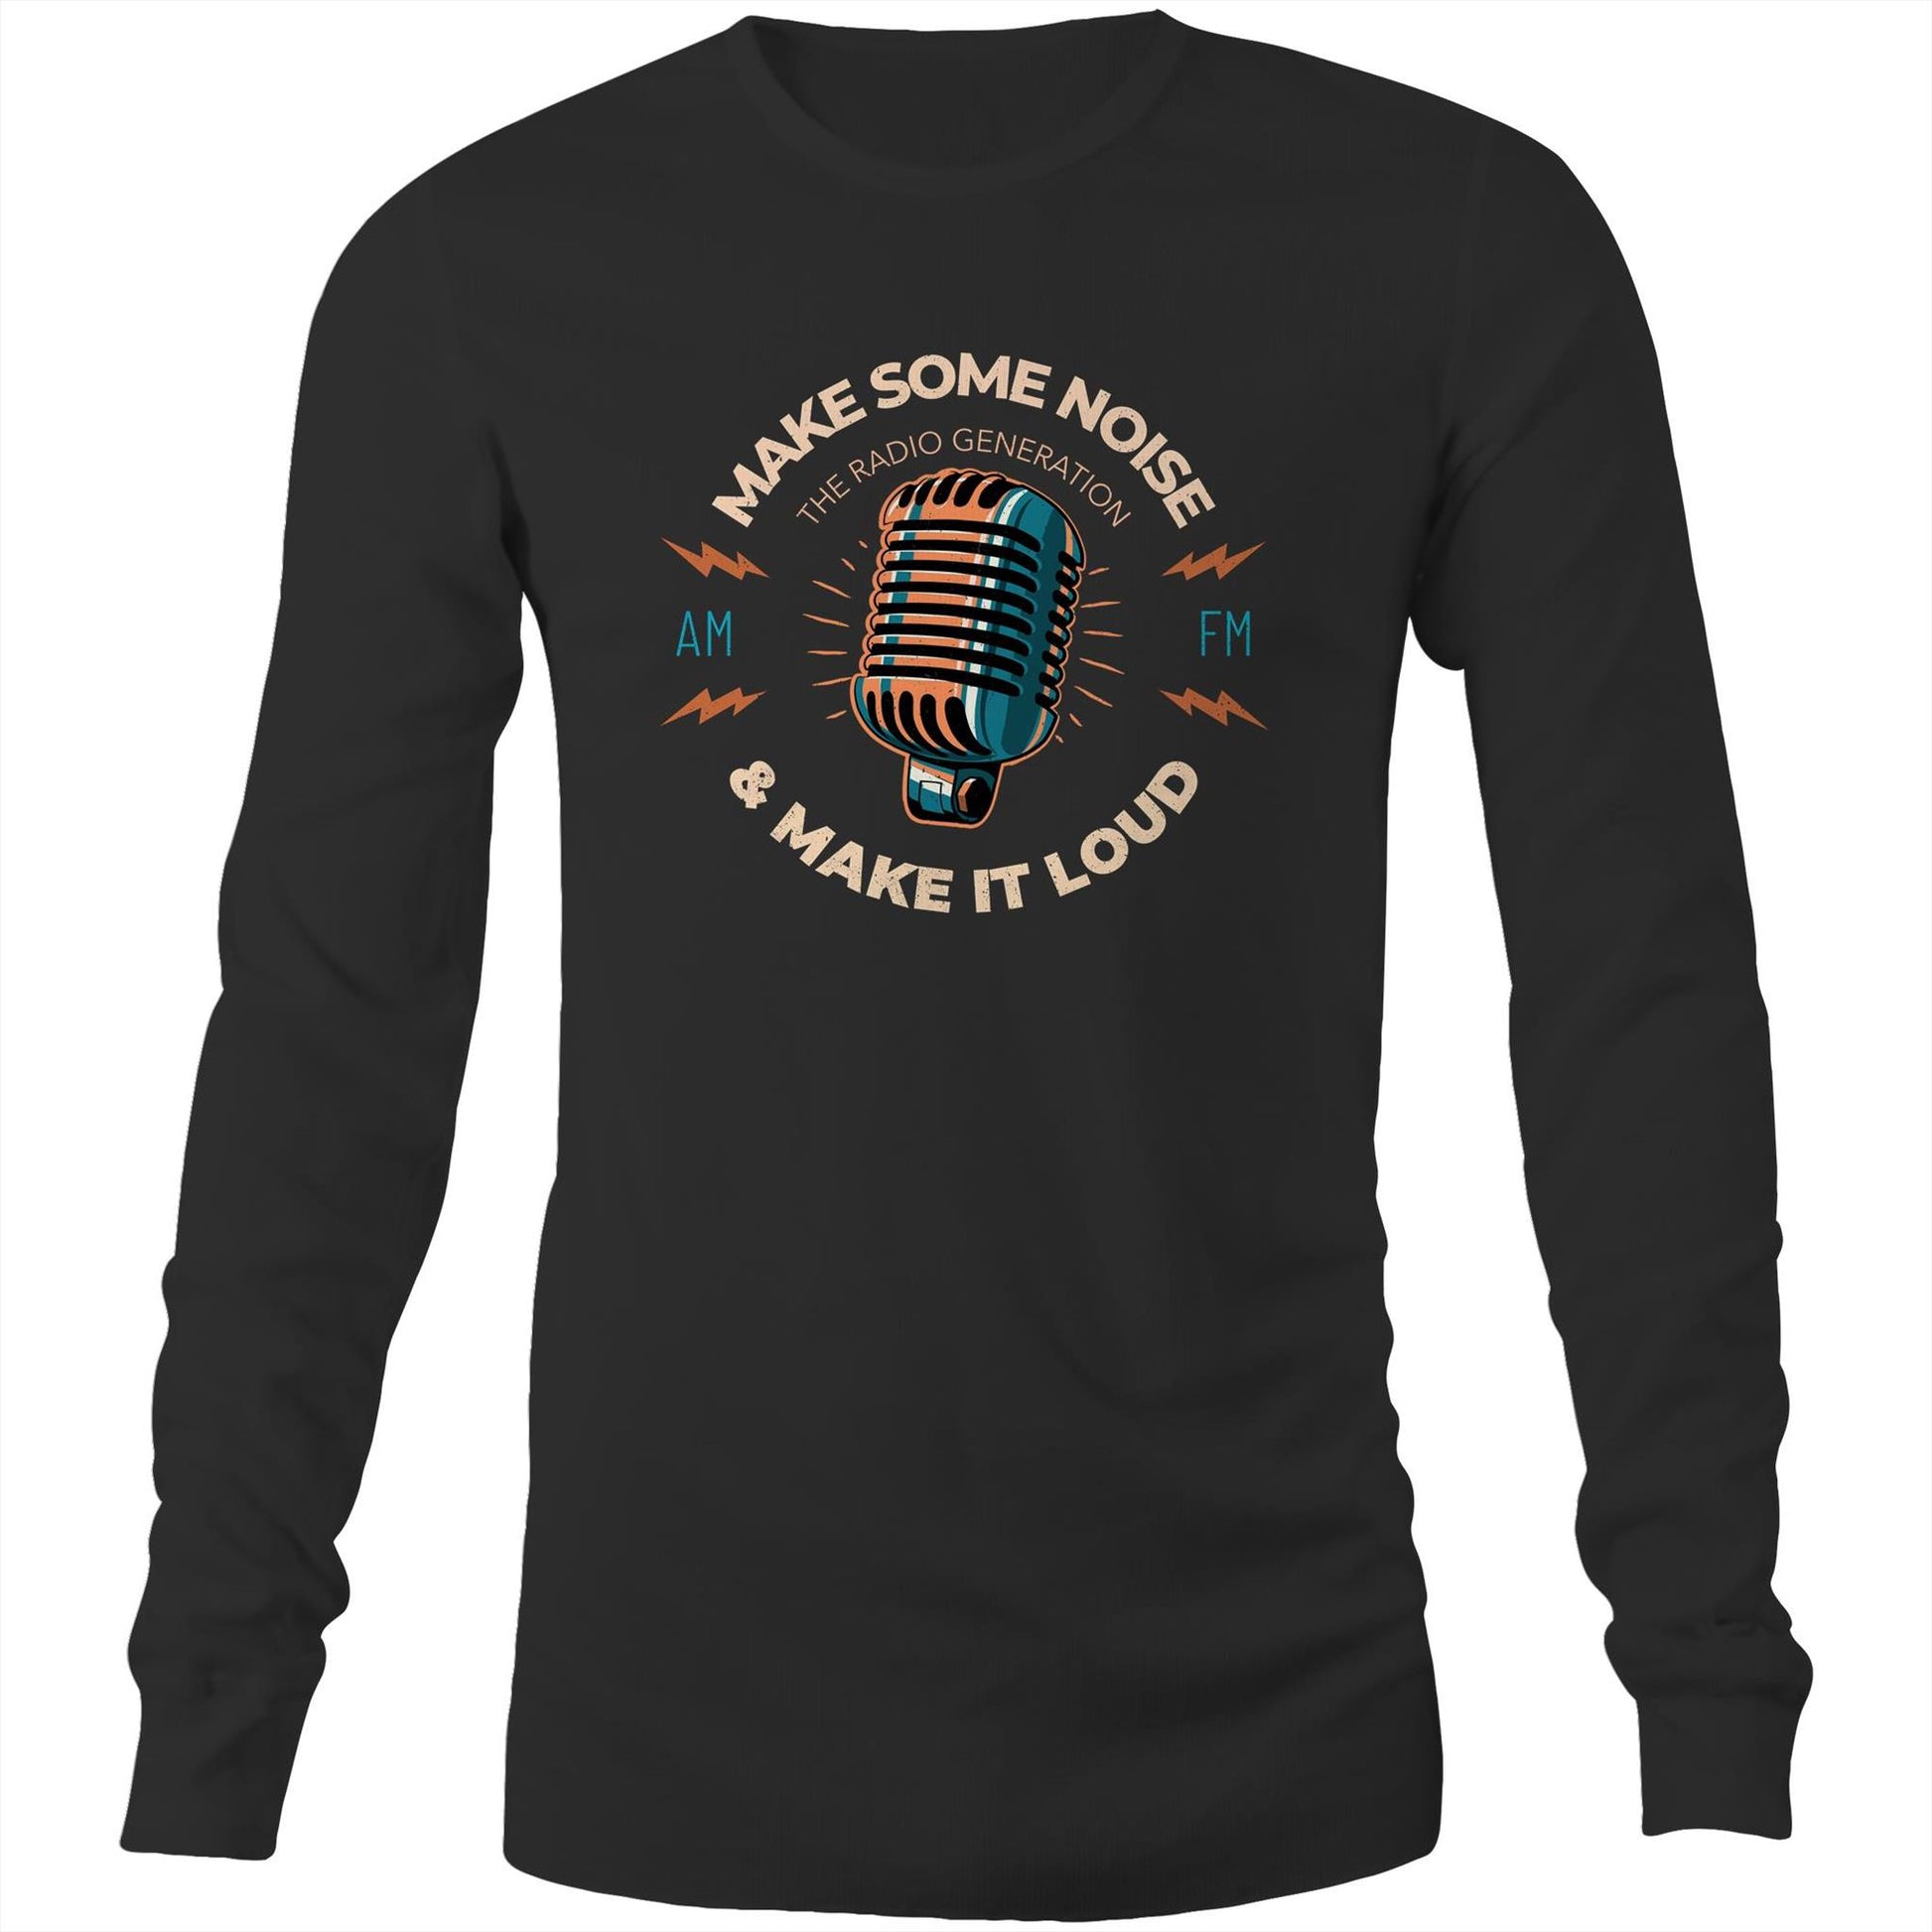 Make Some Noise And Make It Loud - Long Sleeve T-Shirt Black Unisex Long Sleeve T-shirt Music